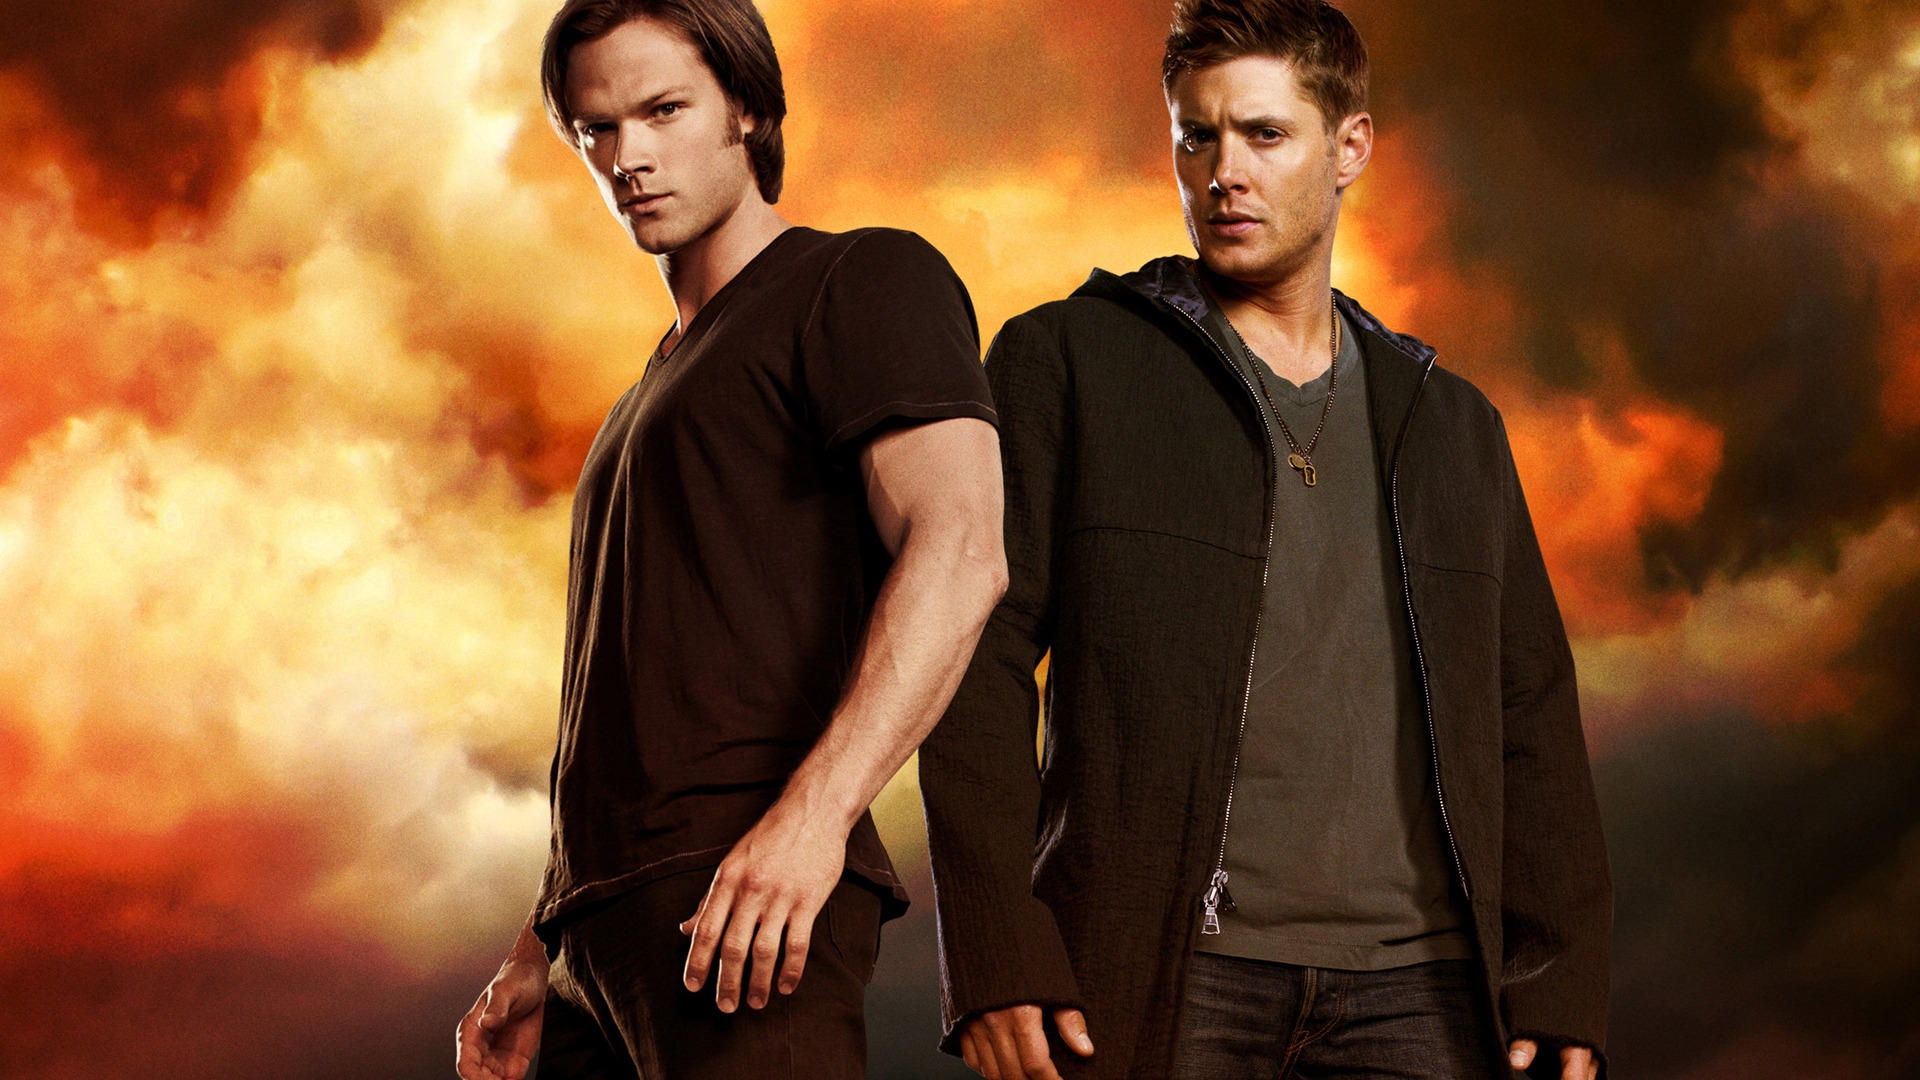 Supernatural Dean & Sam for 1920 x 1080 HDTV 1080p resolution